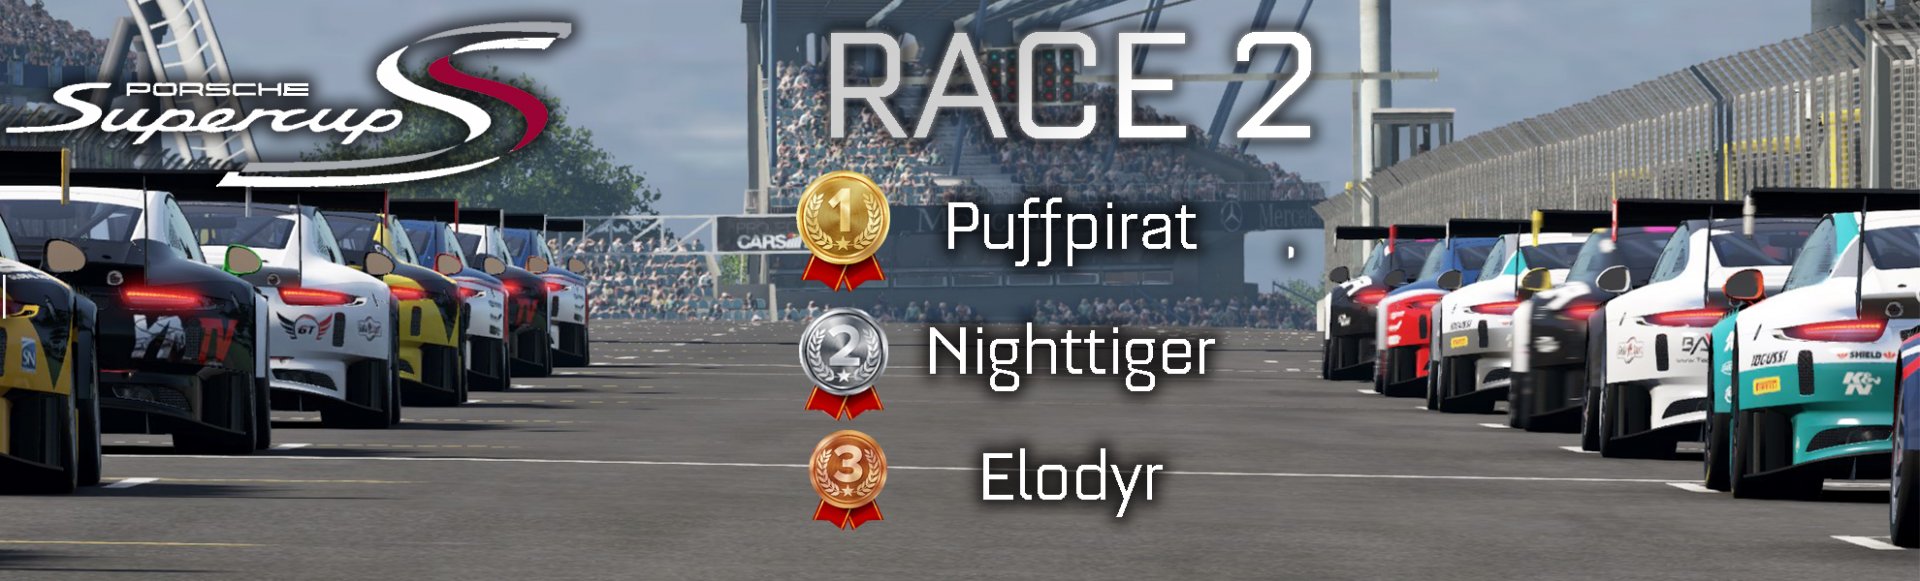 Result race 2.jpg